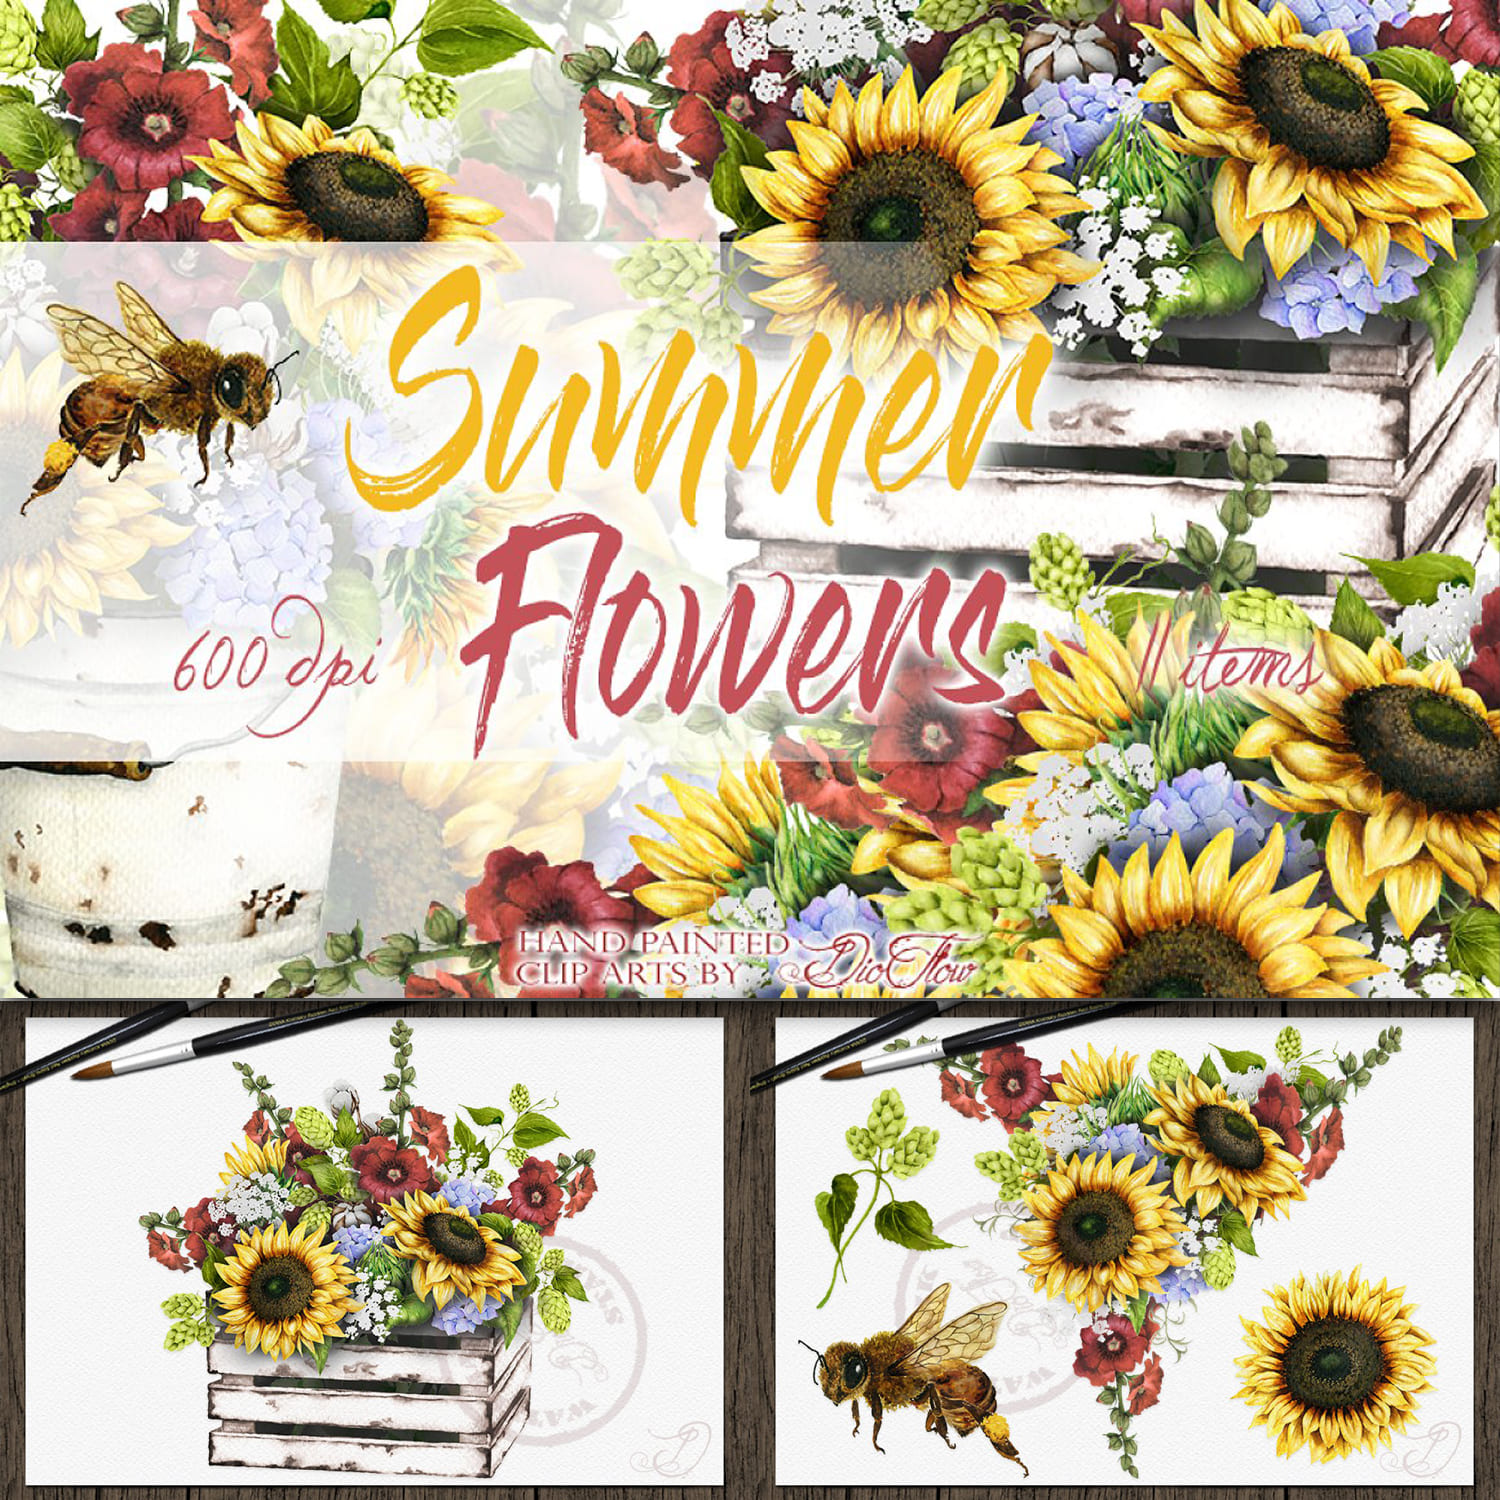 Summer Flowers Illustration cover.